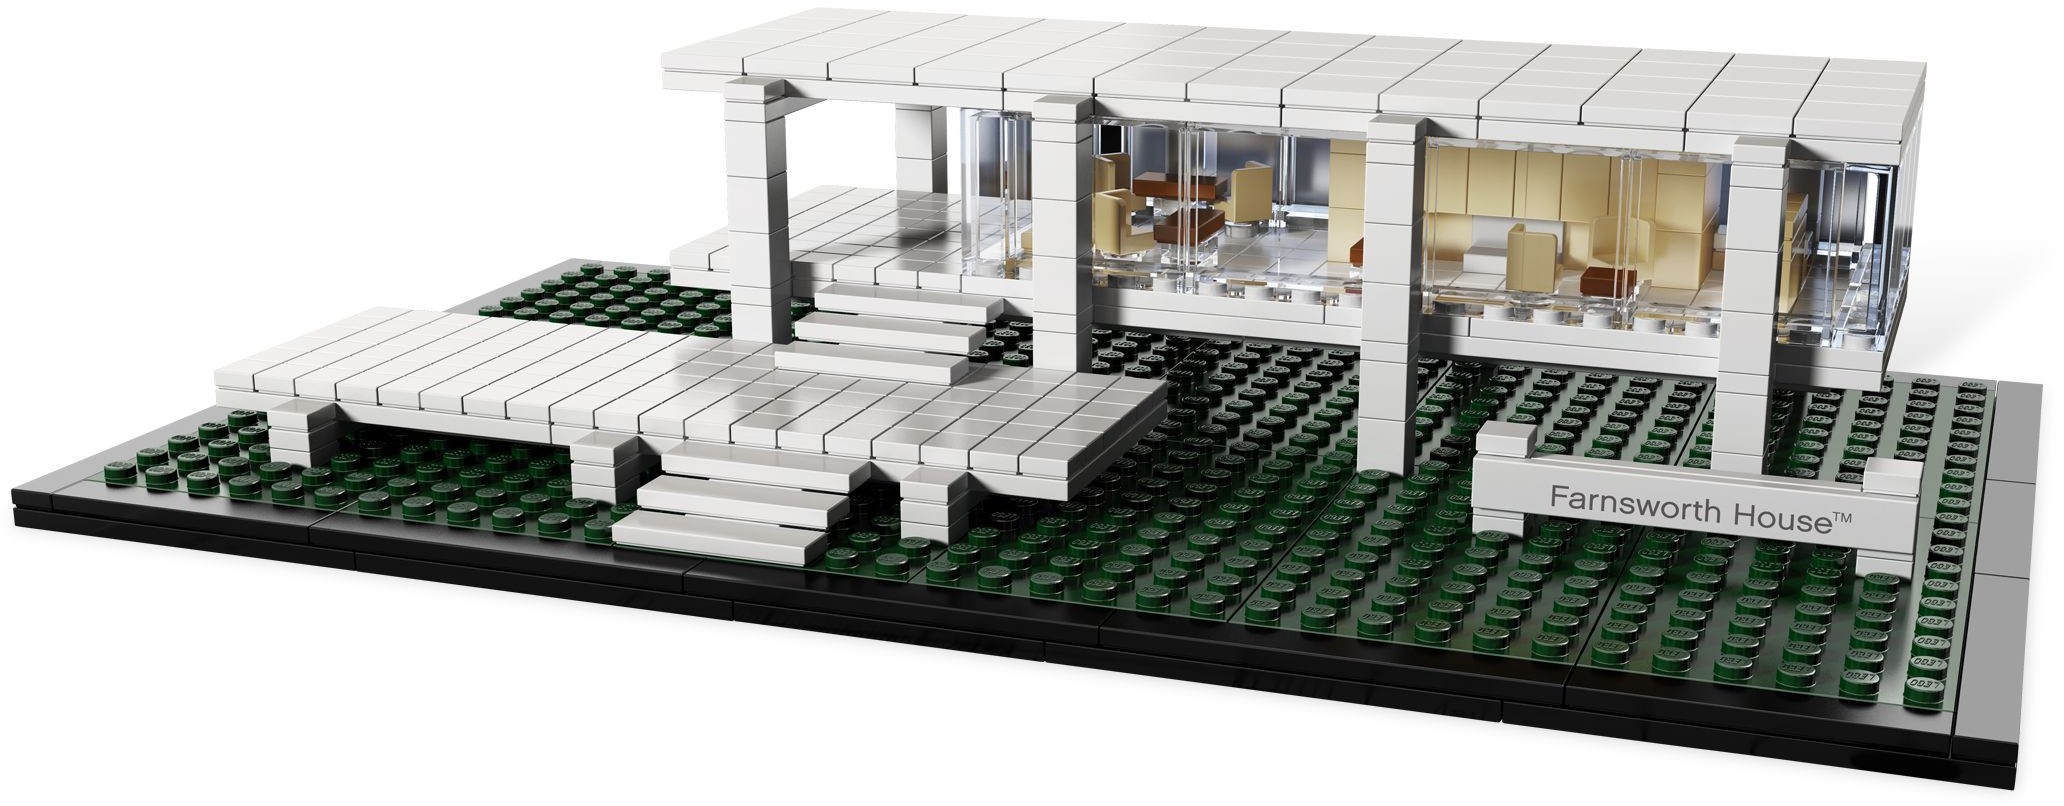 Architecture | Brickset: LEGO set guide 